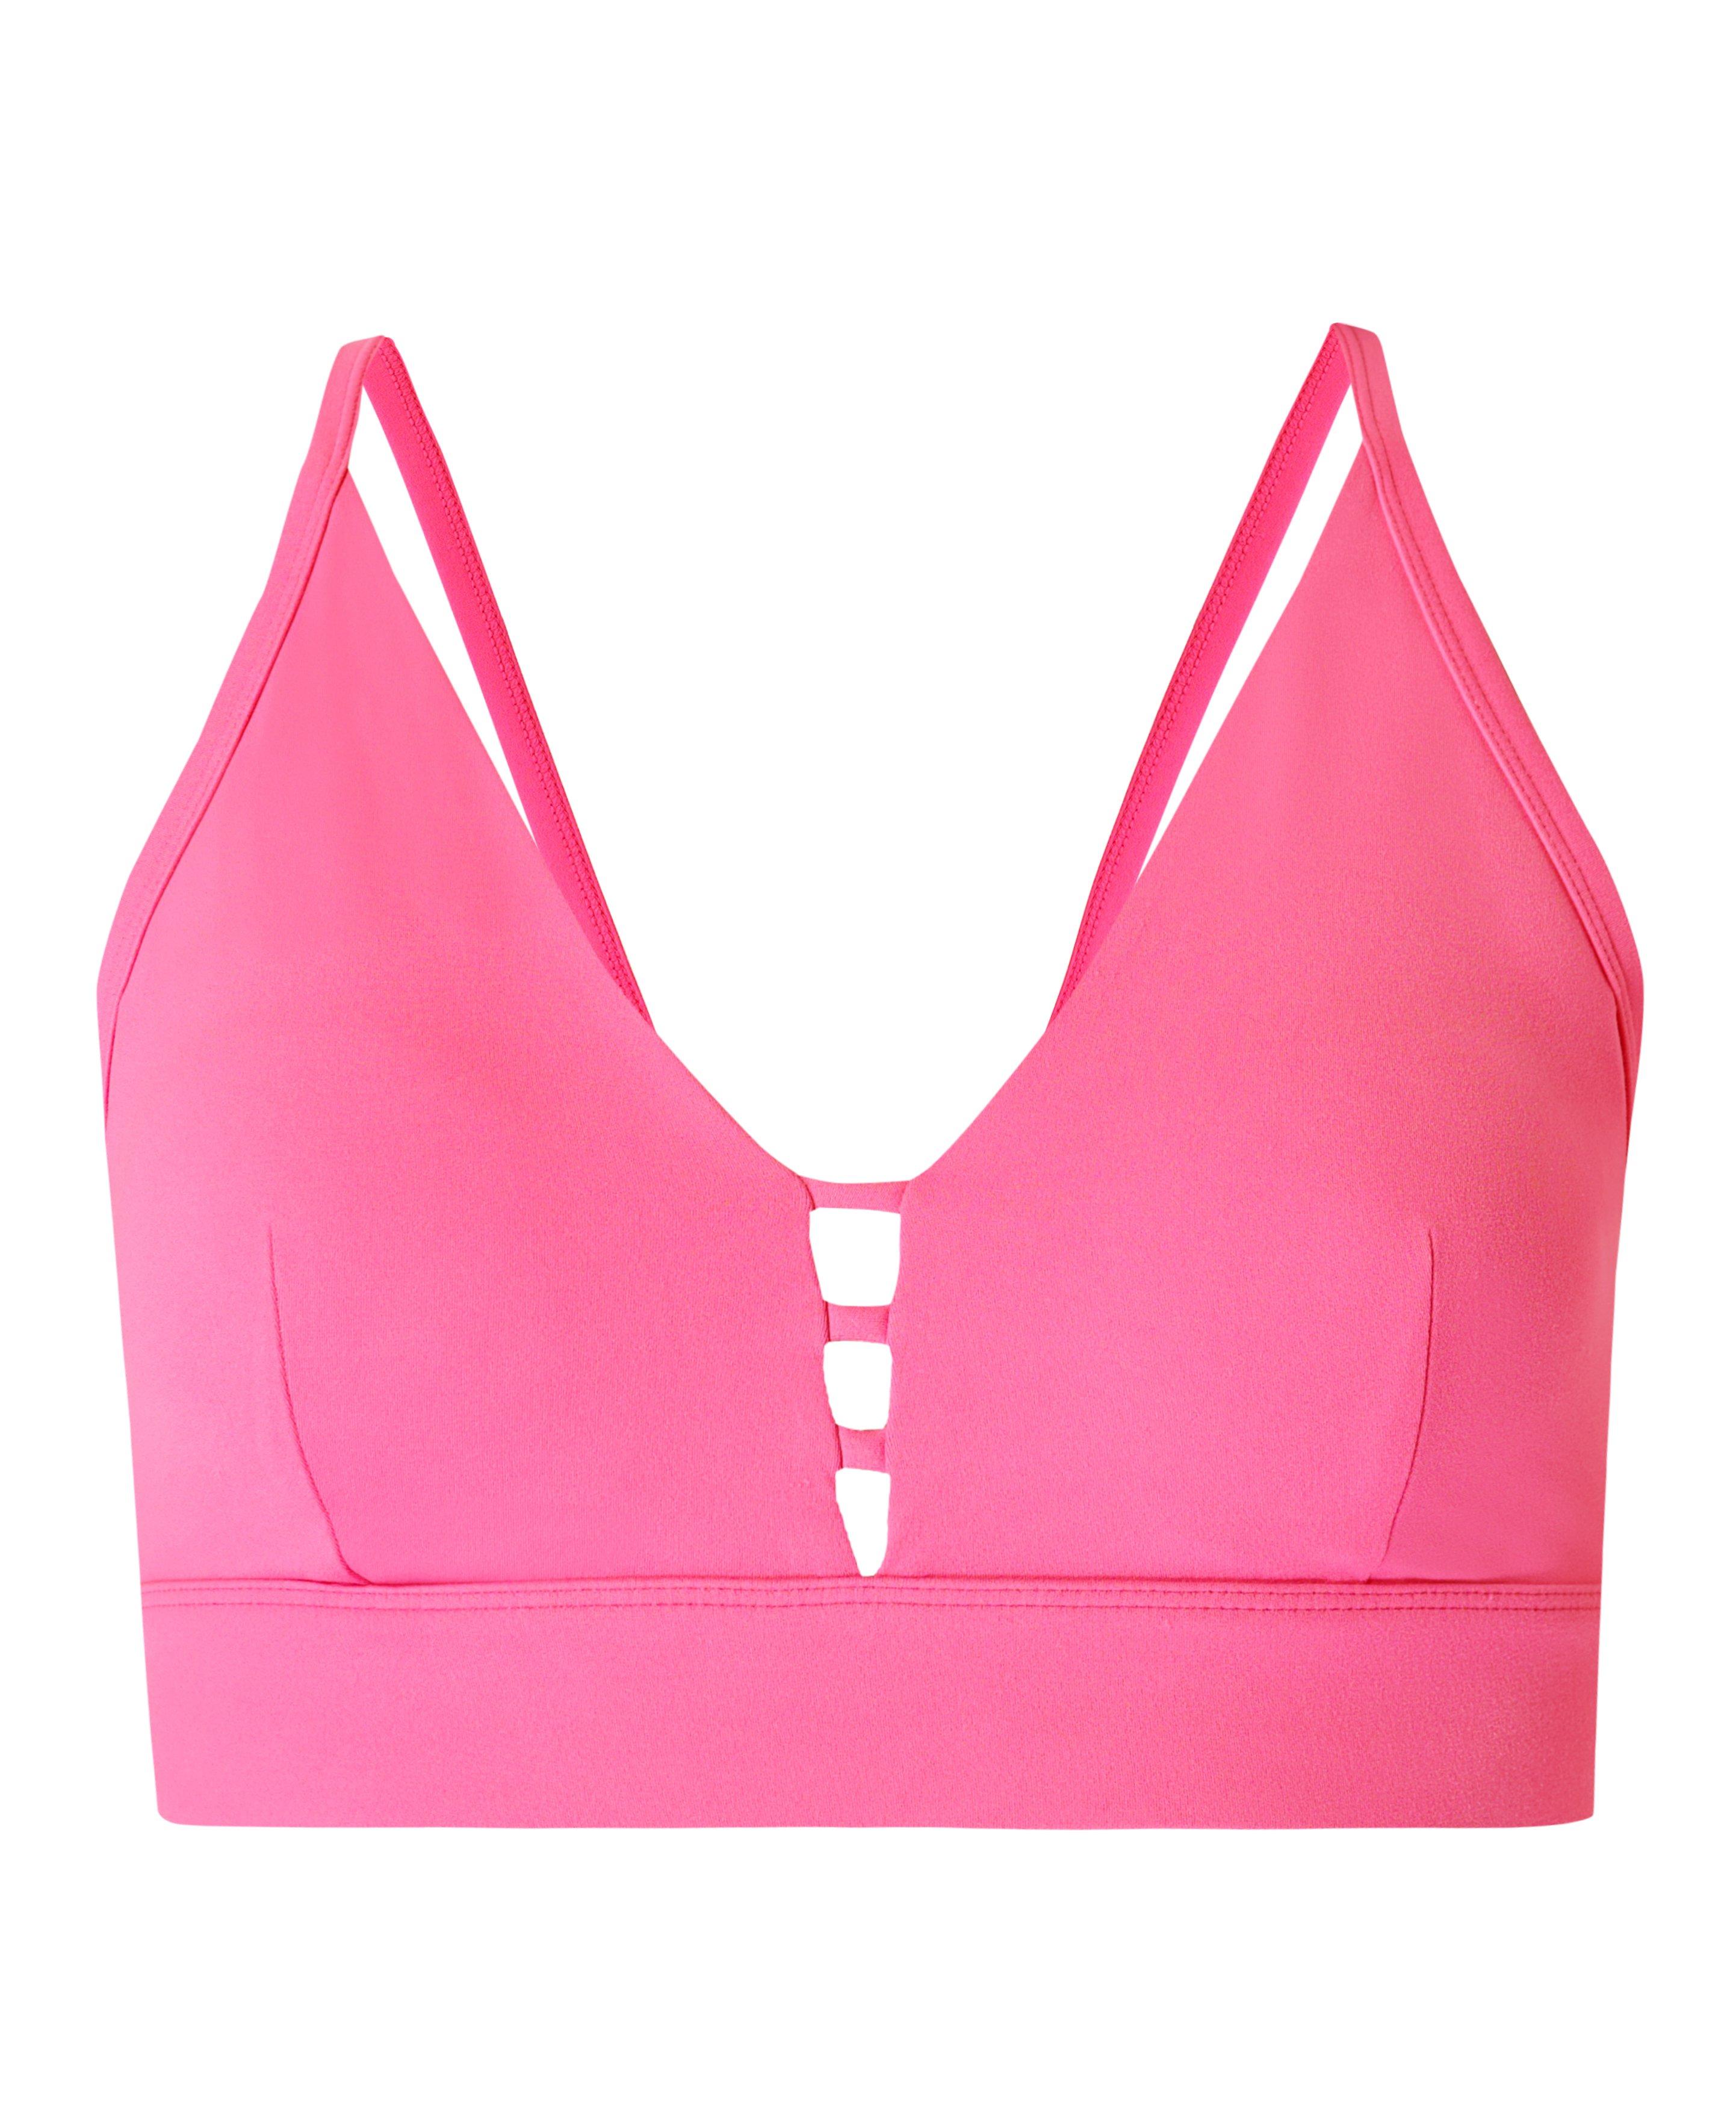 Sweaty Betty Studio Open Back Sports Bra Pink Pebble Print Small Retail $70  EUC